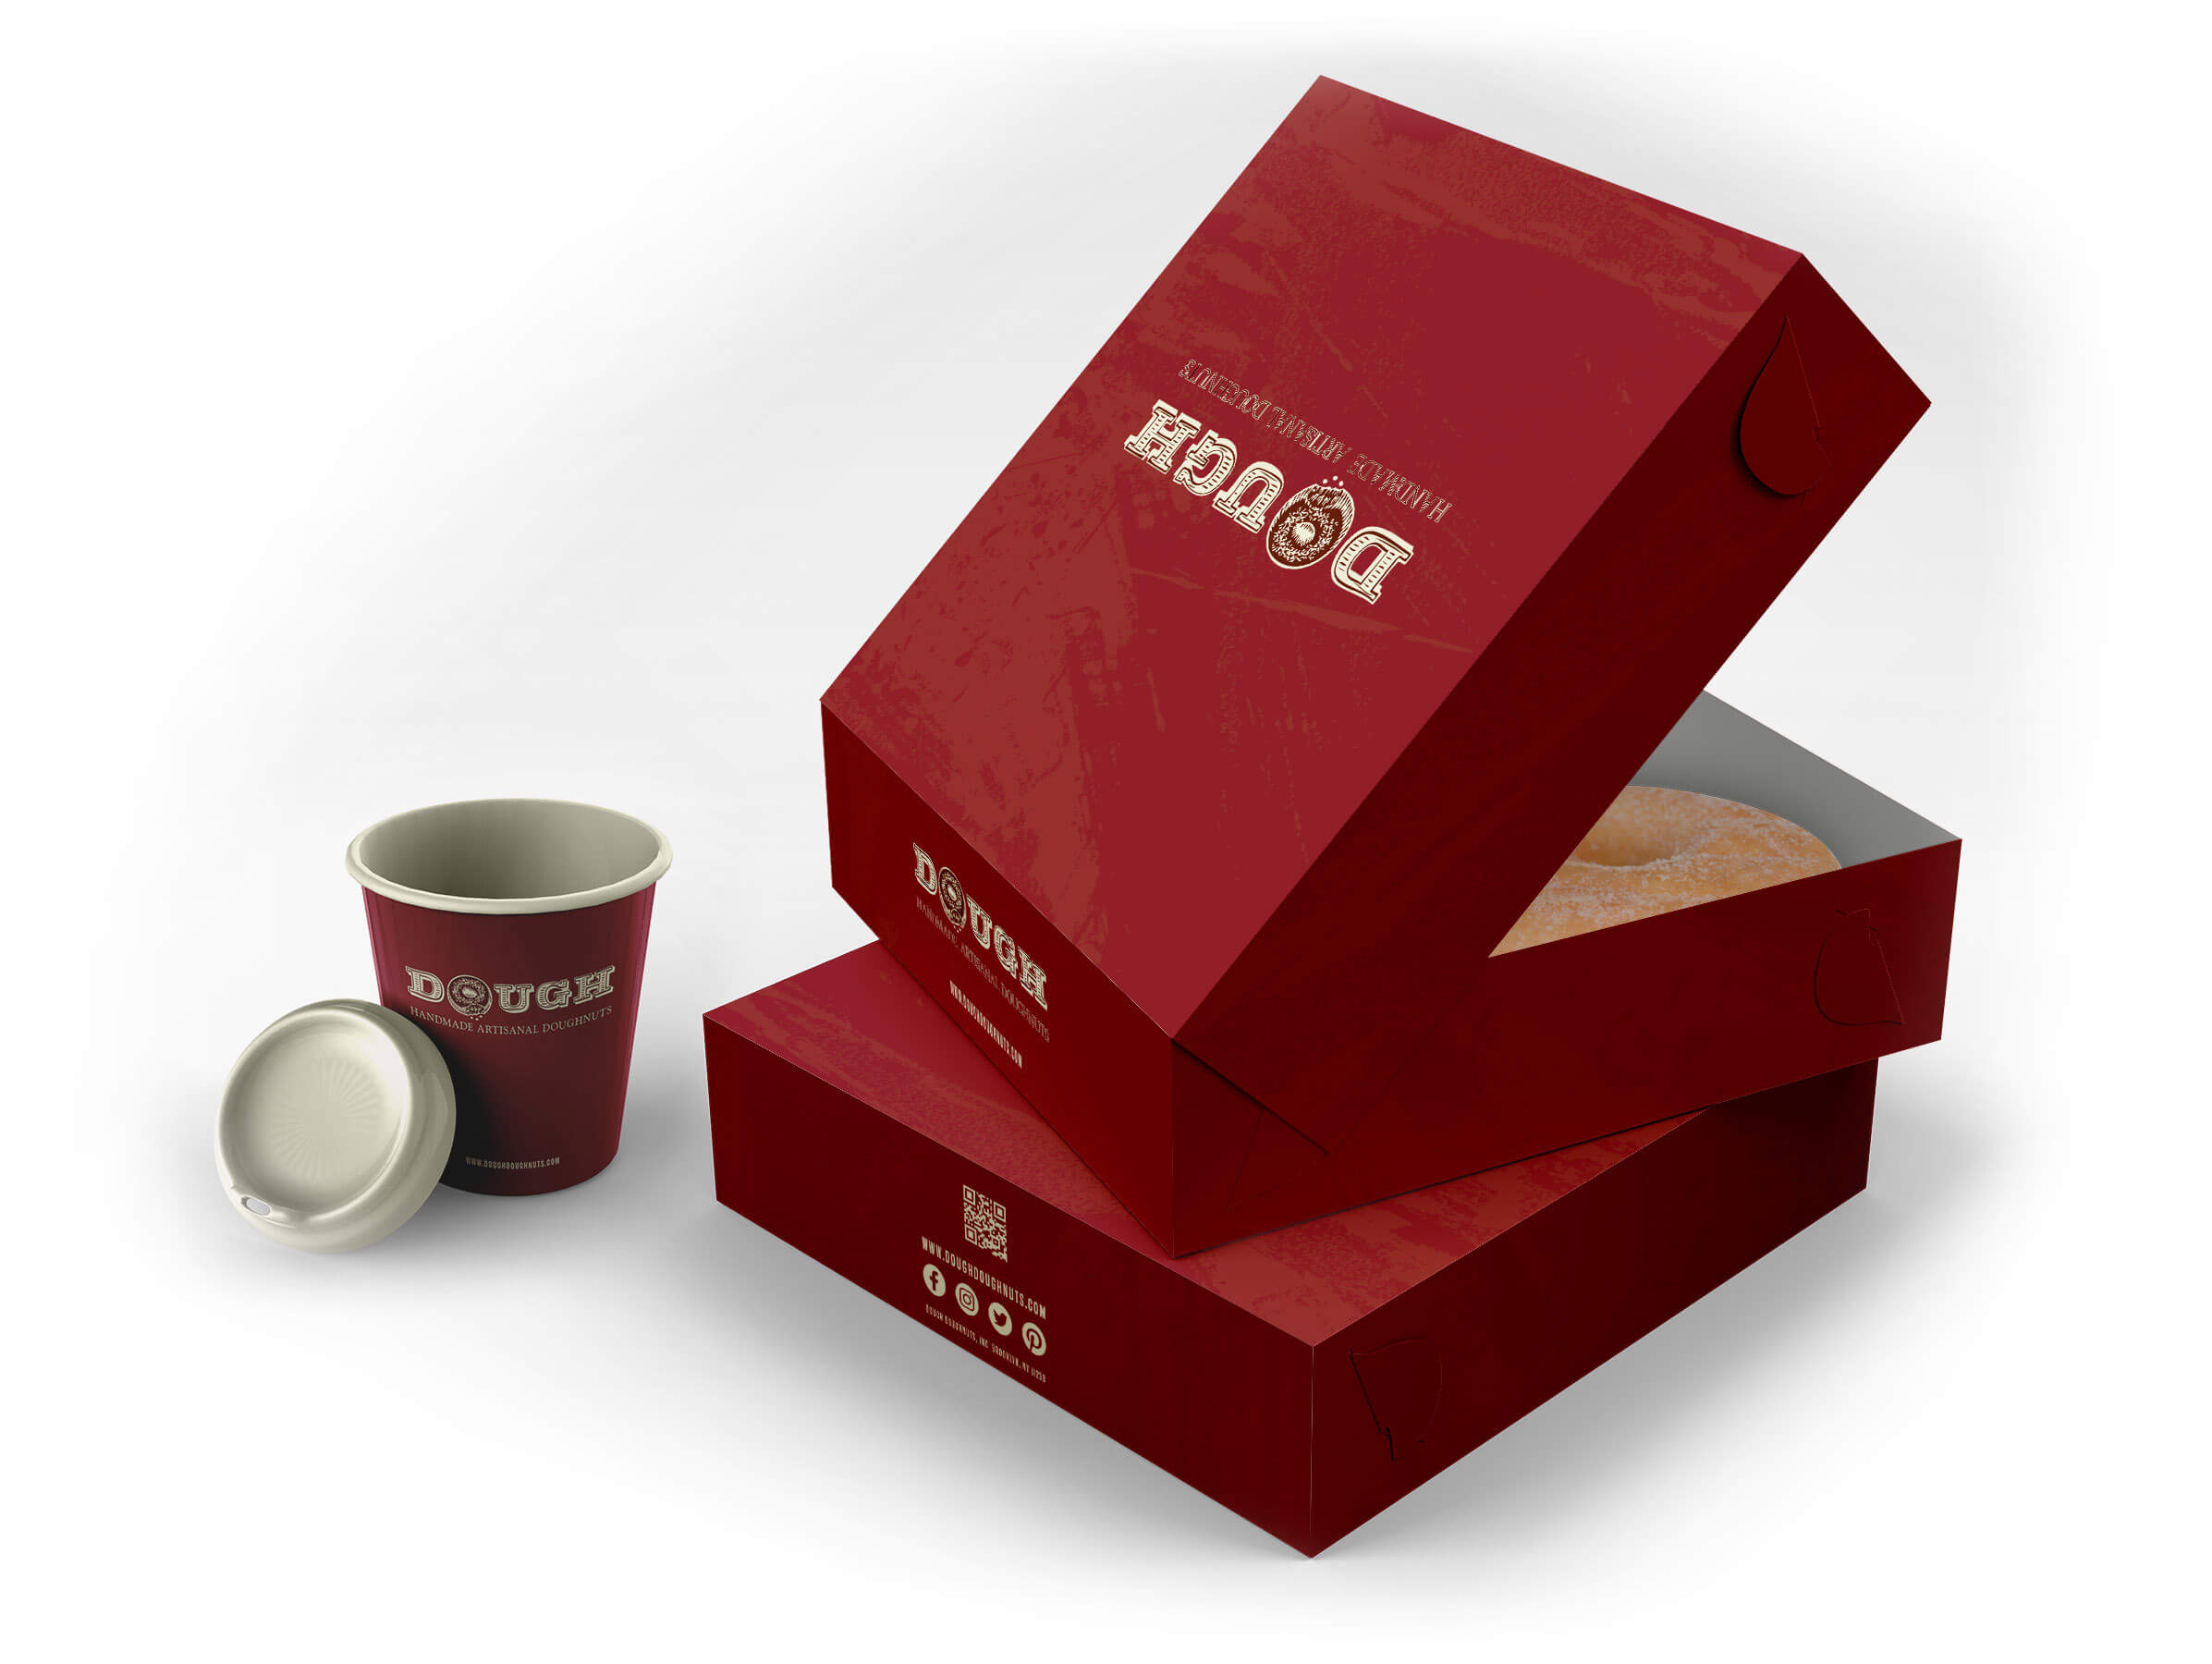 Doughnut logo design displayed on box and coffee cup